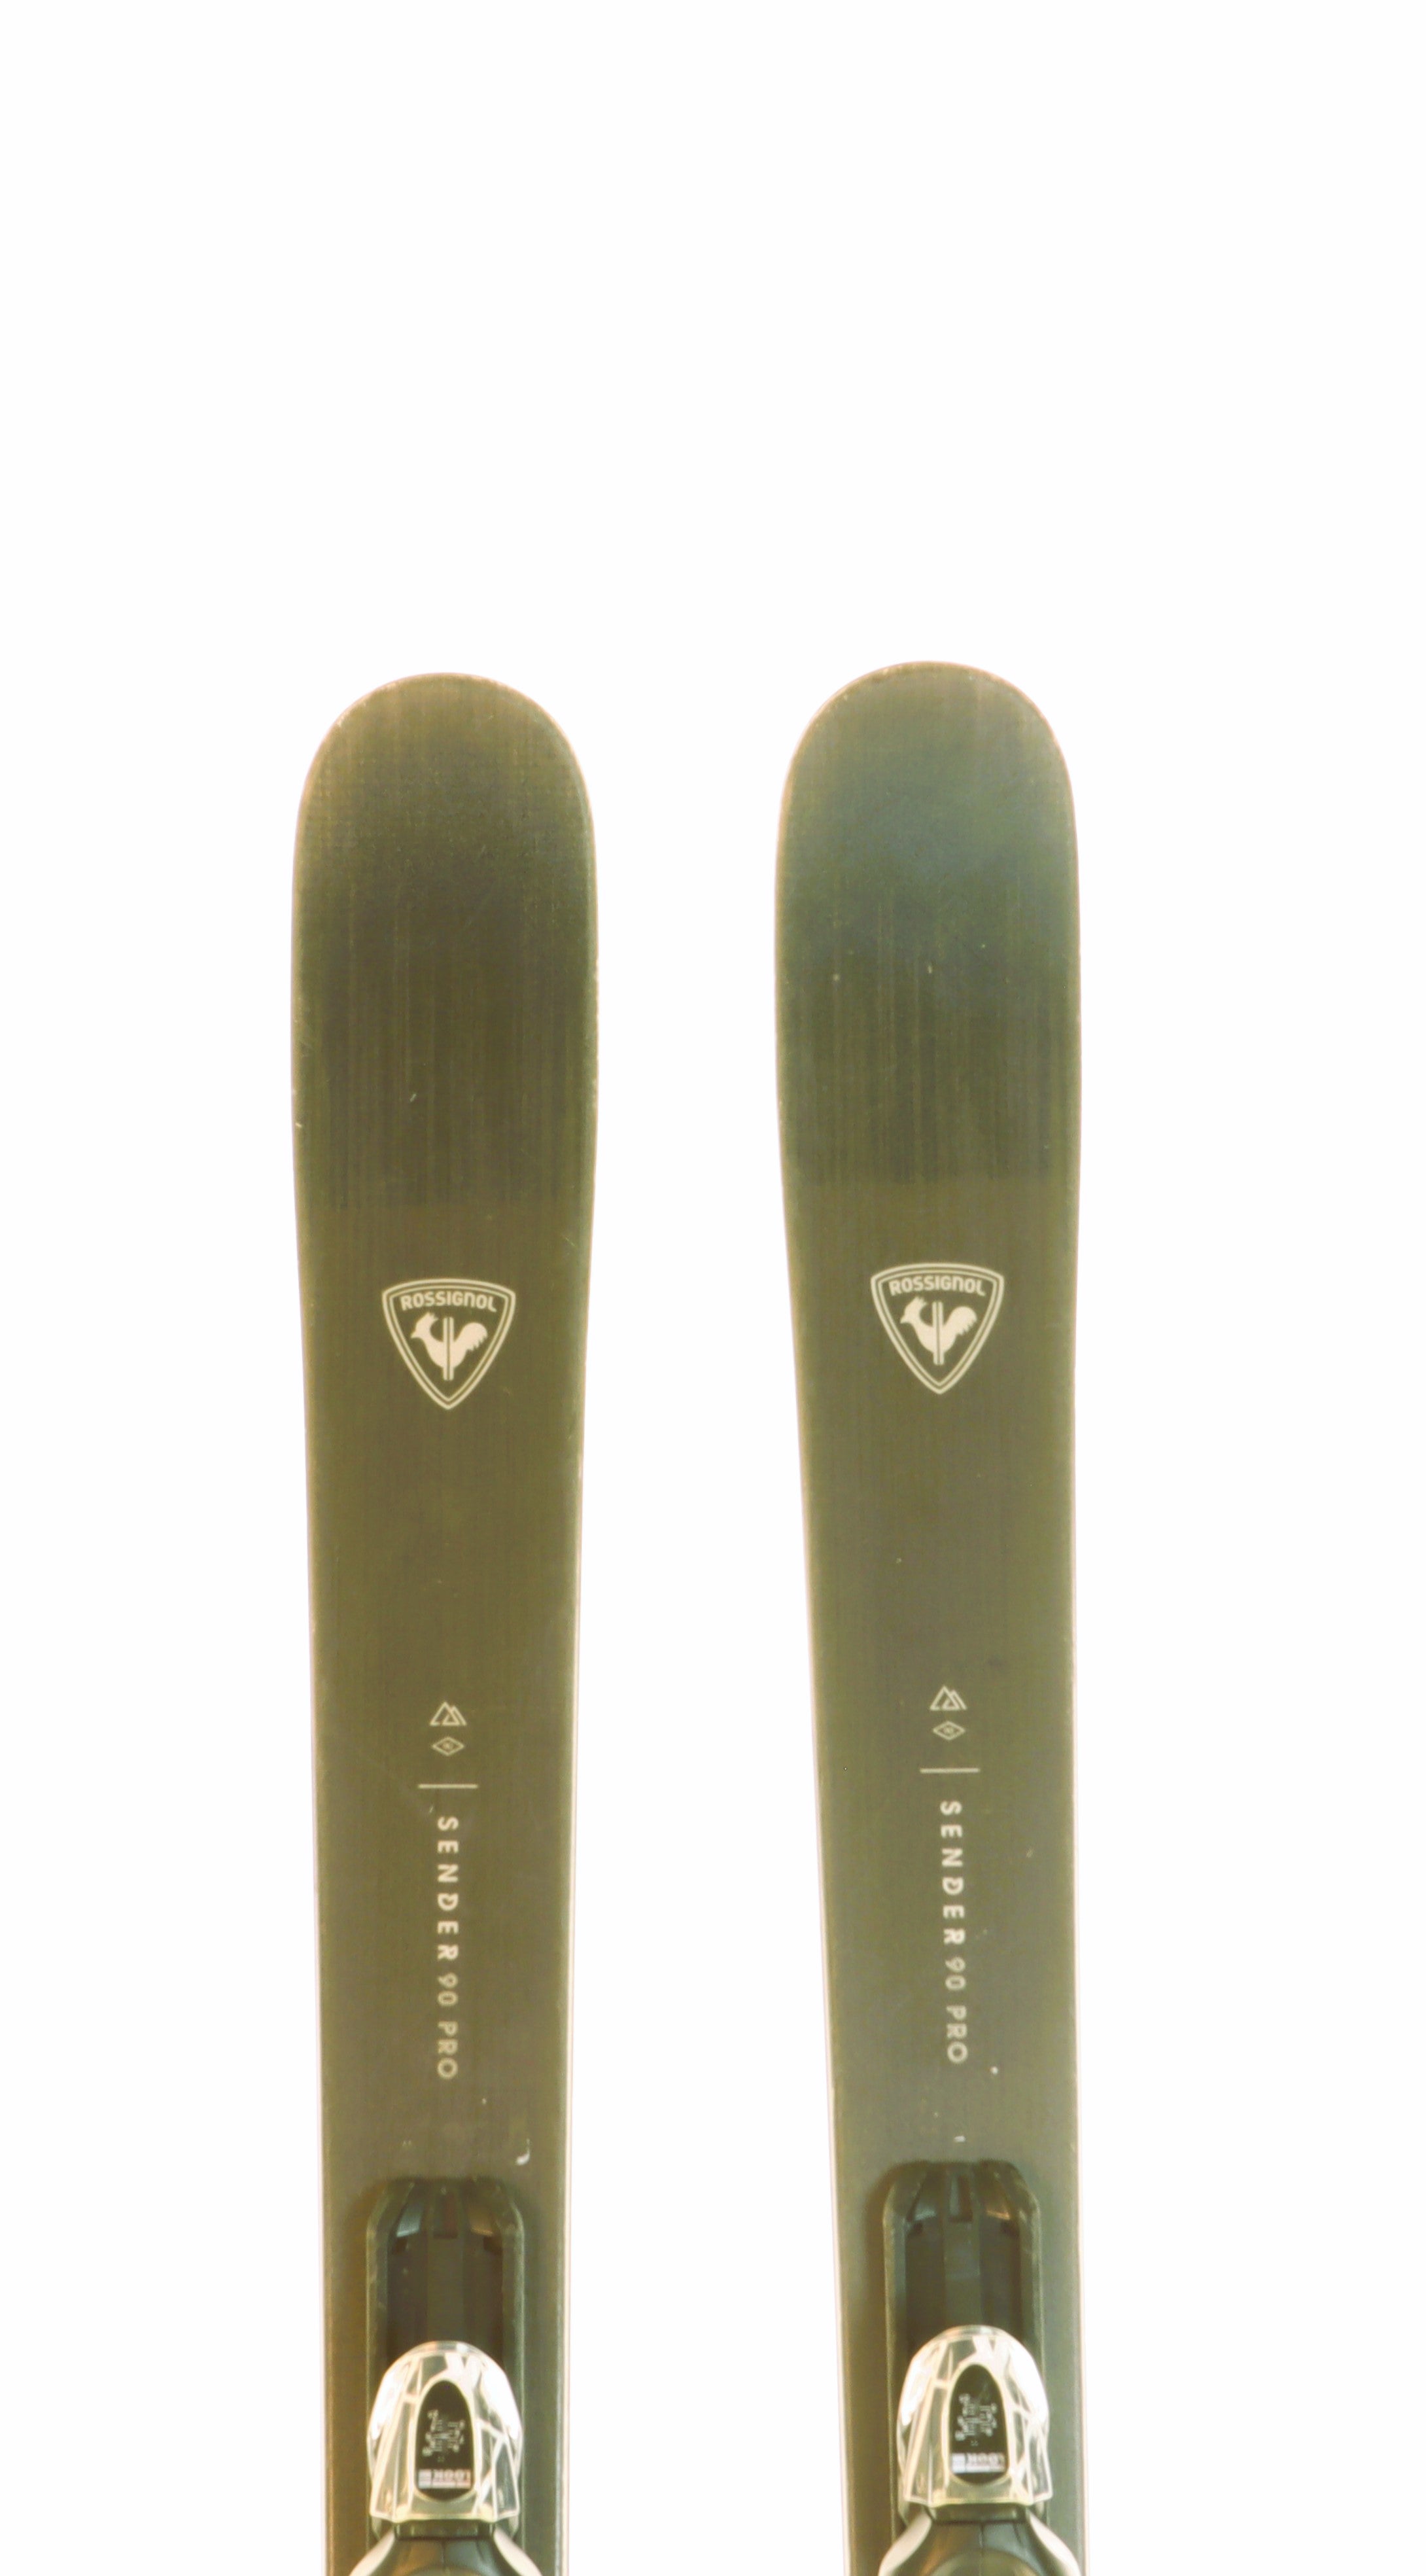 New Rossignol React 2 Skis + Xpress 10 Gw Bindings 162cm